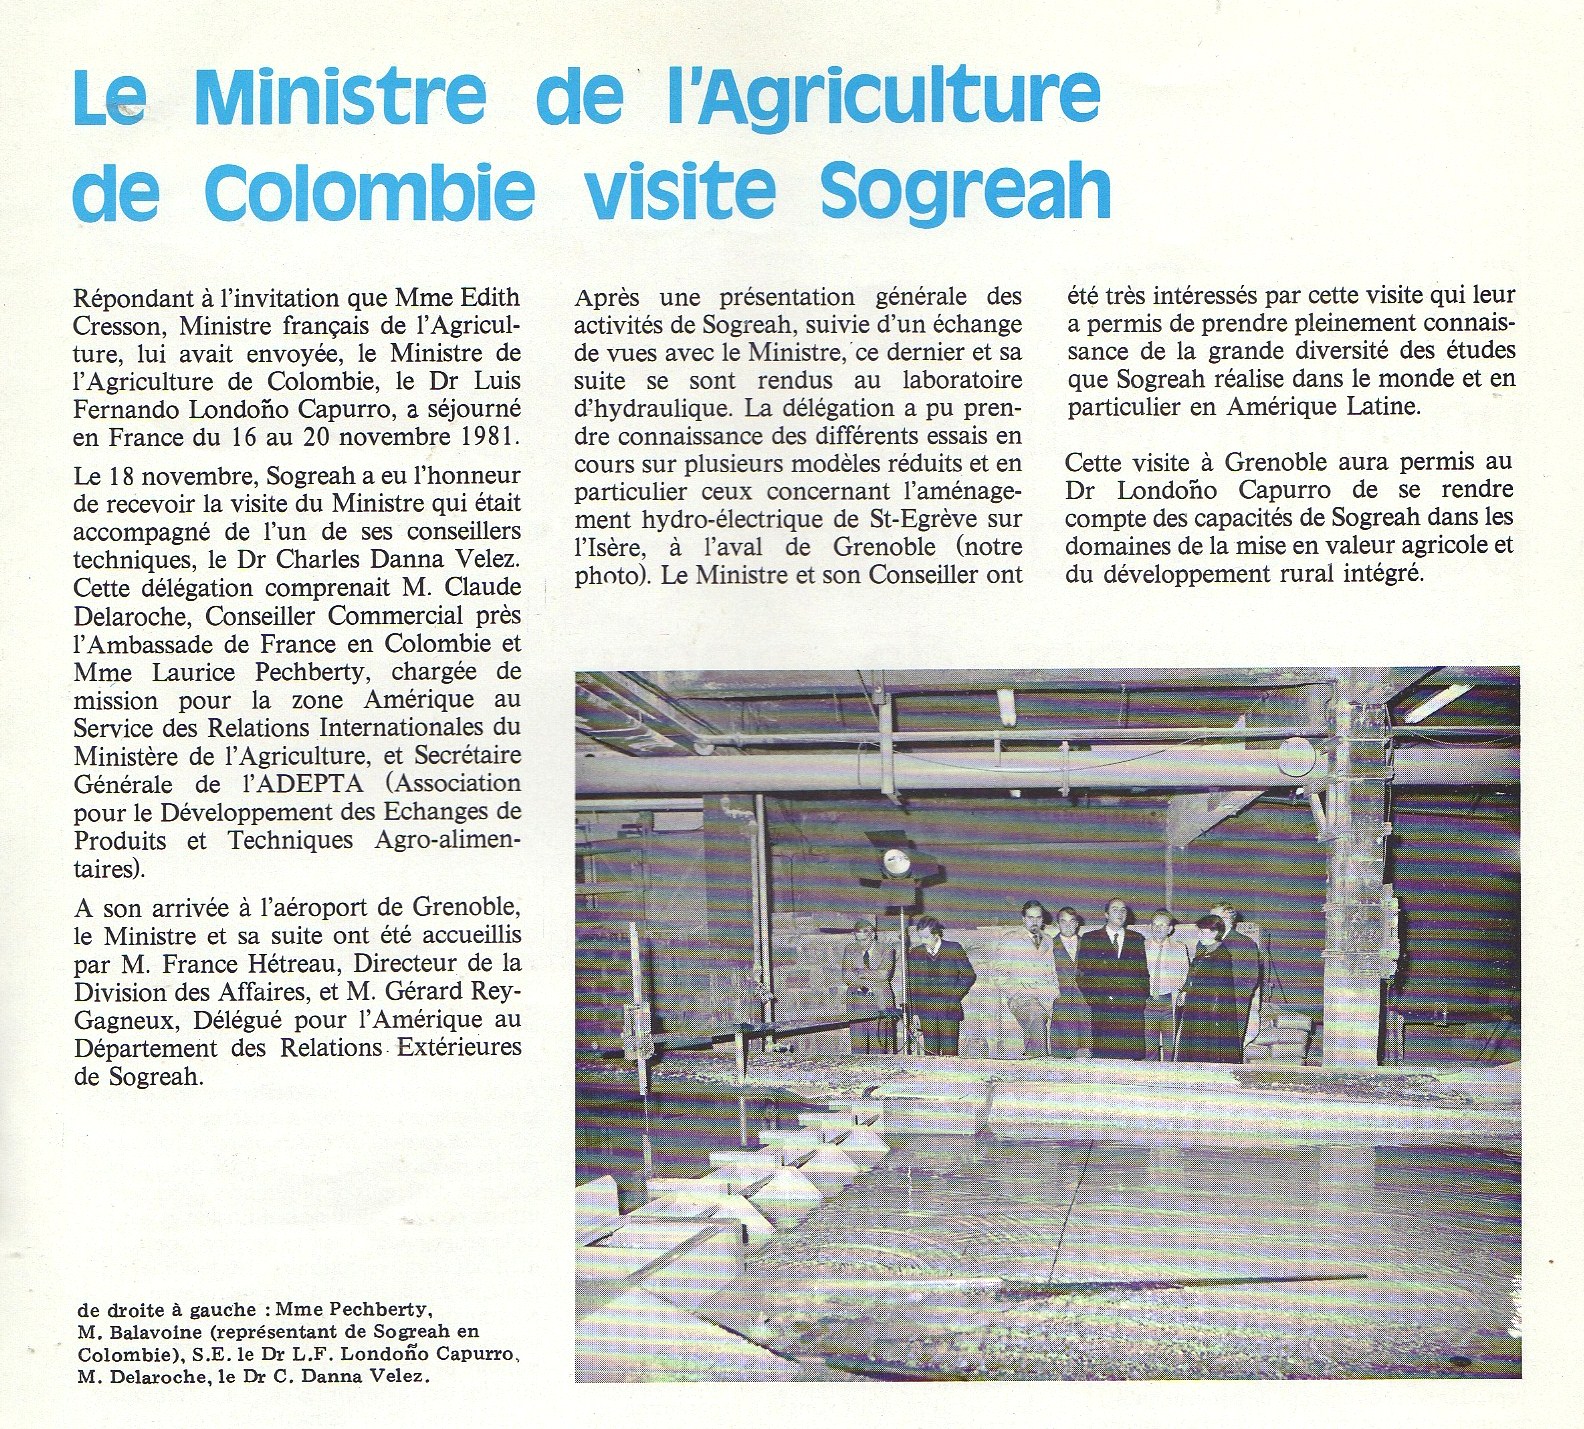 1981 visite ministre agri colombie